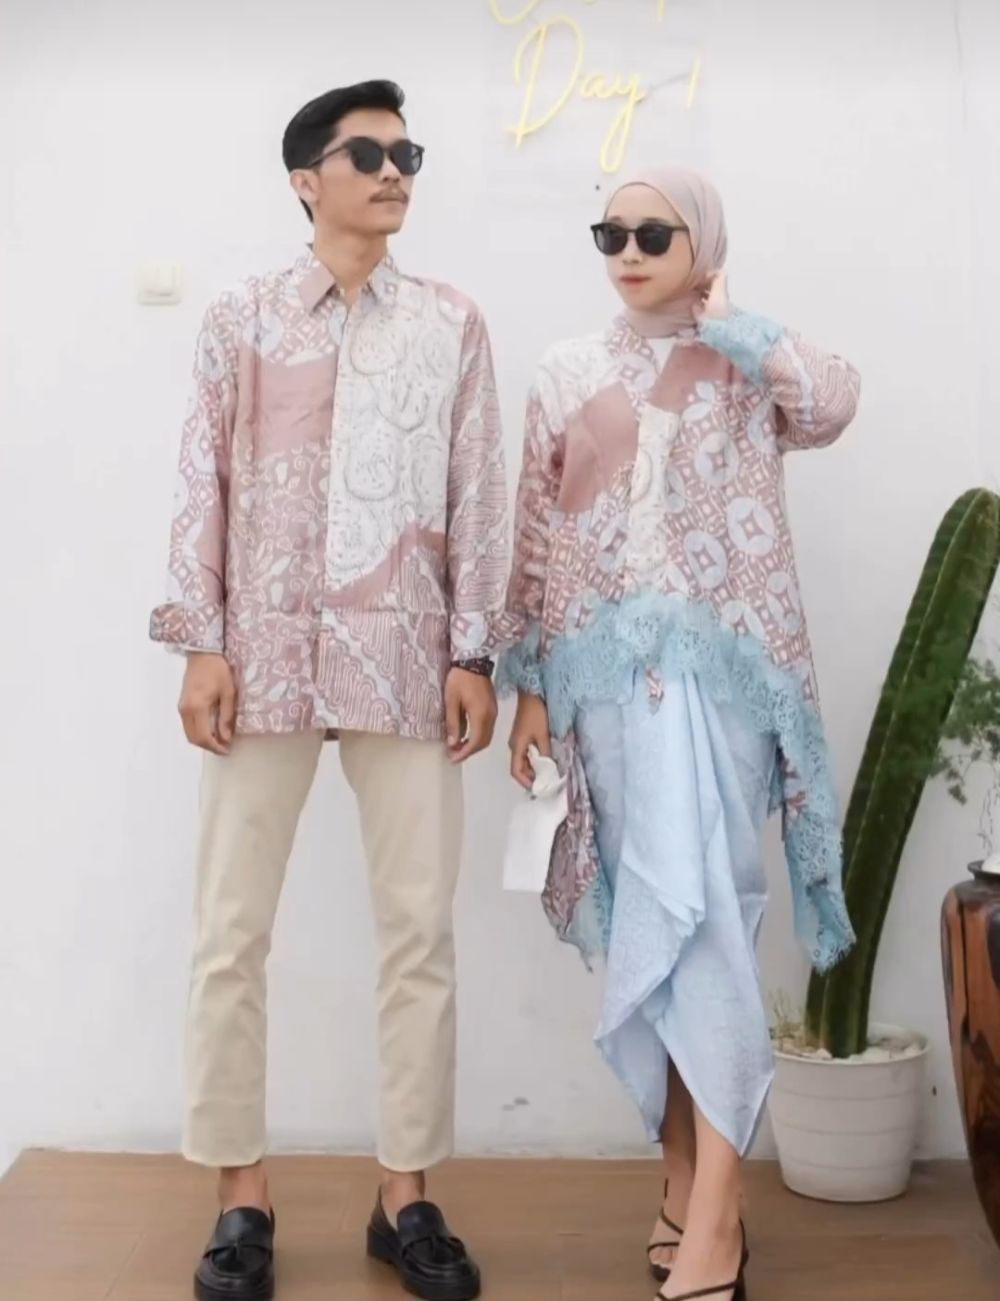 9 Ide Outfit Couple untuk Photoshoot, Casual hingga Batik